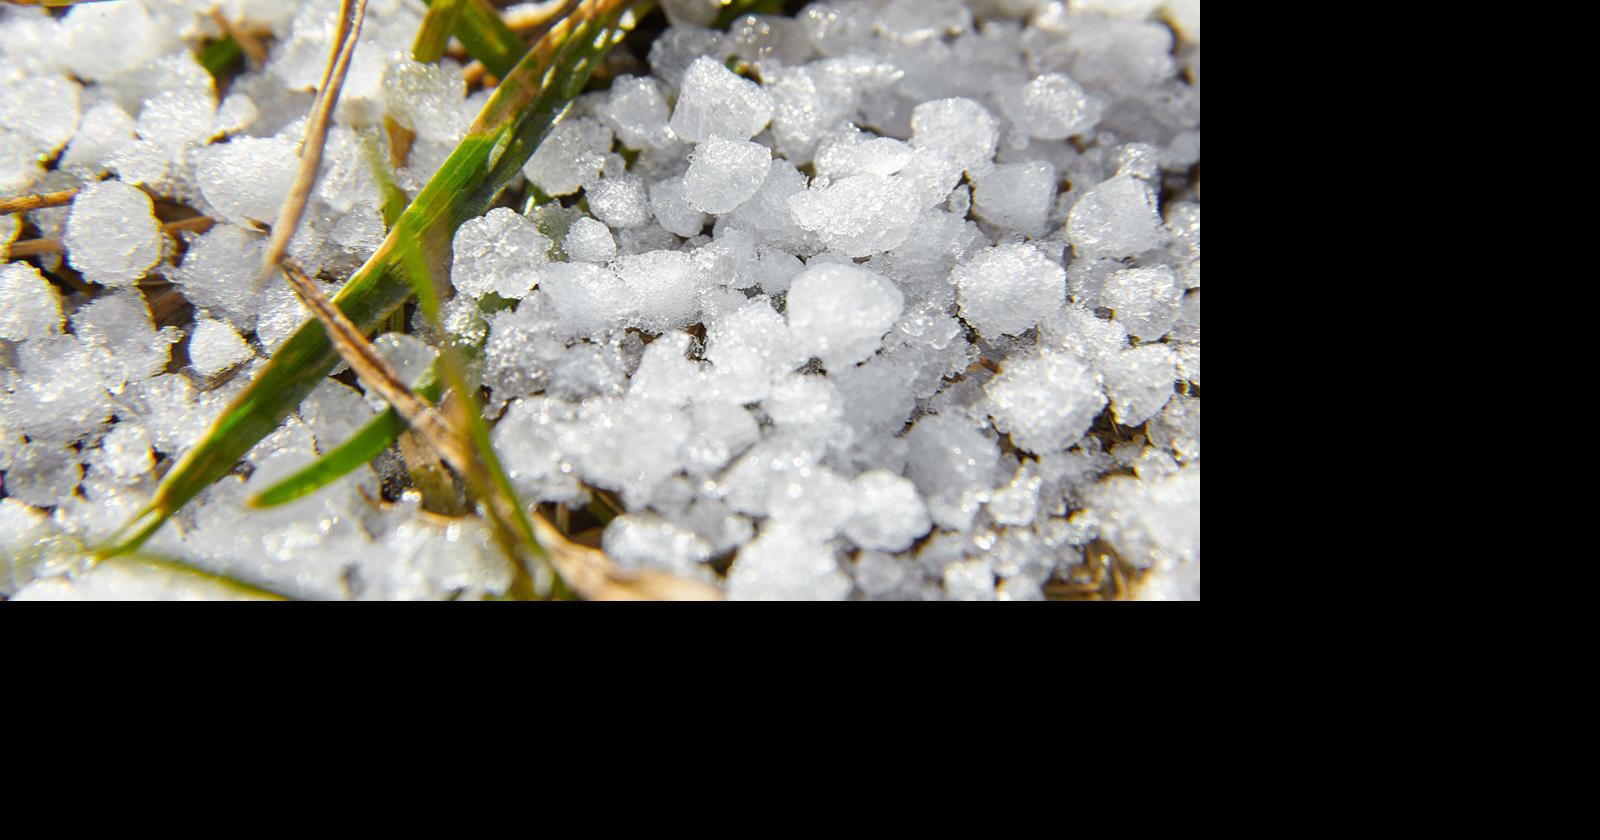 Graupel vs hail vs sleet: SF may see them all this week | Climate ...